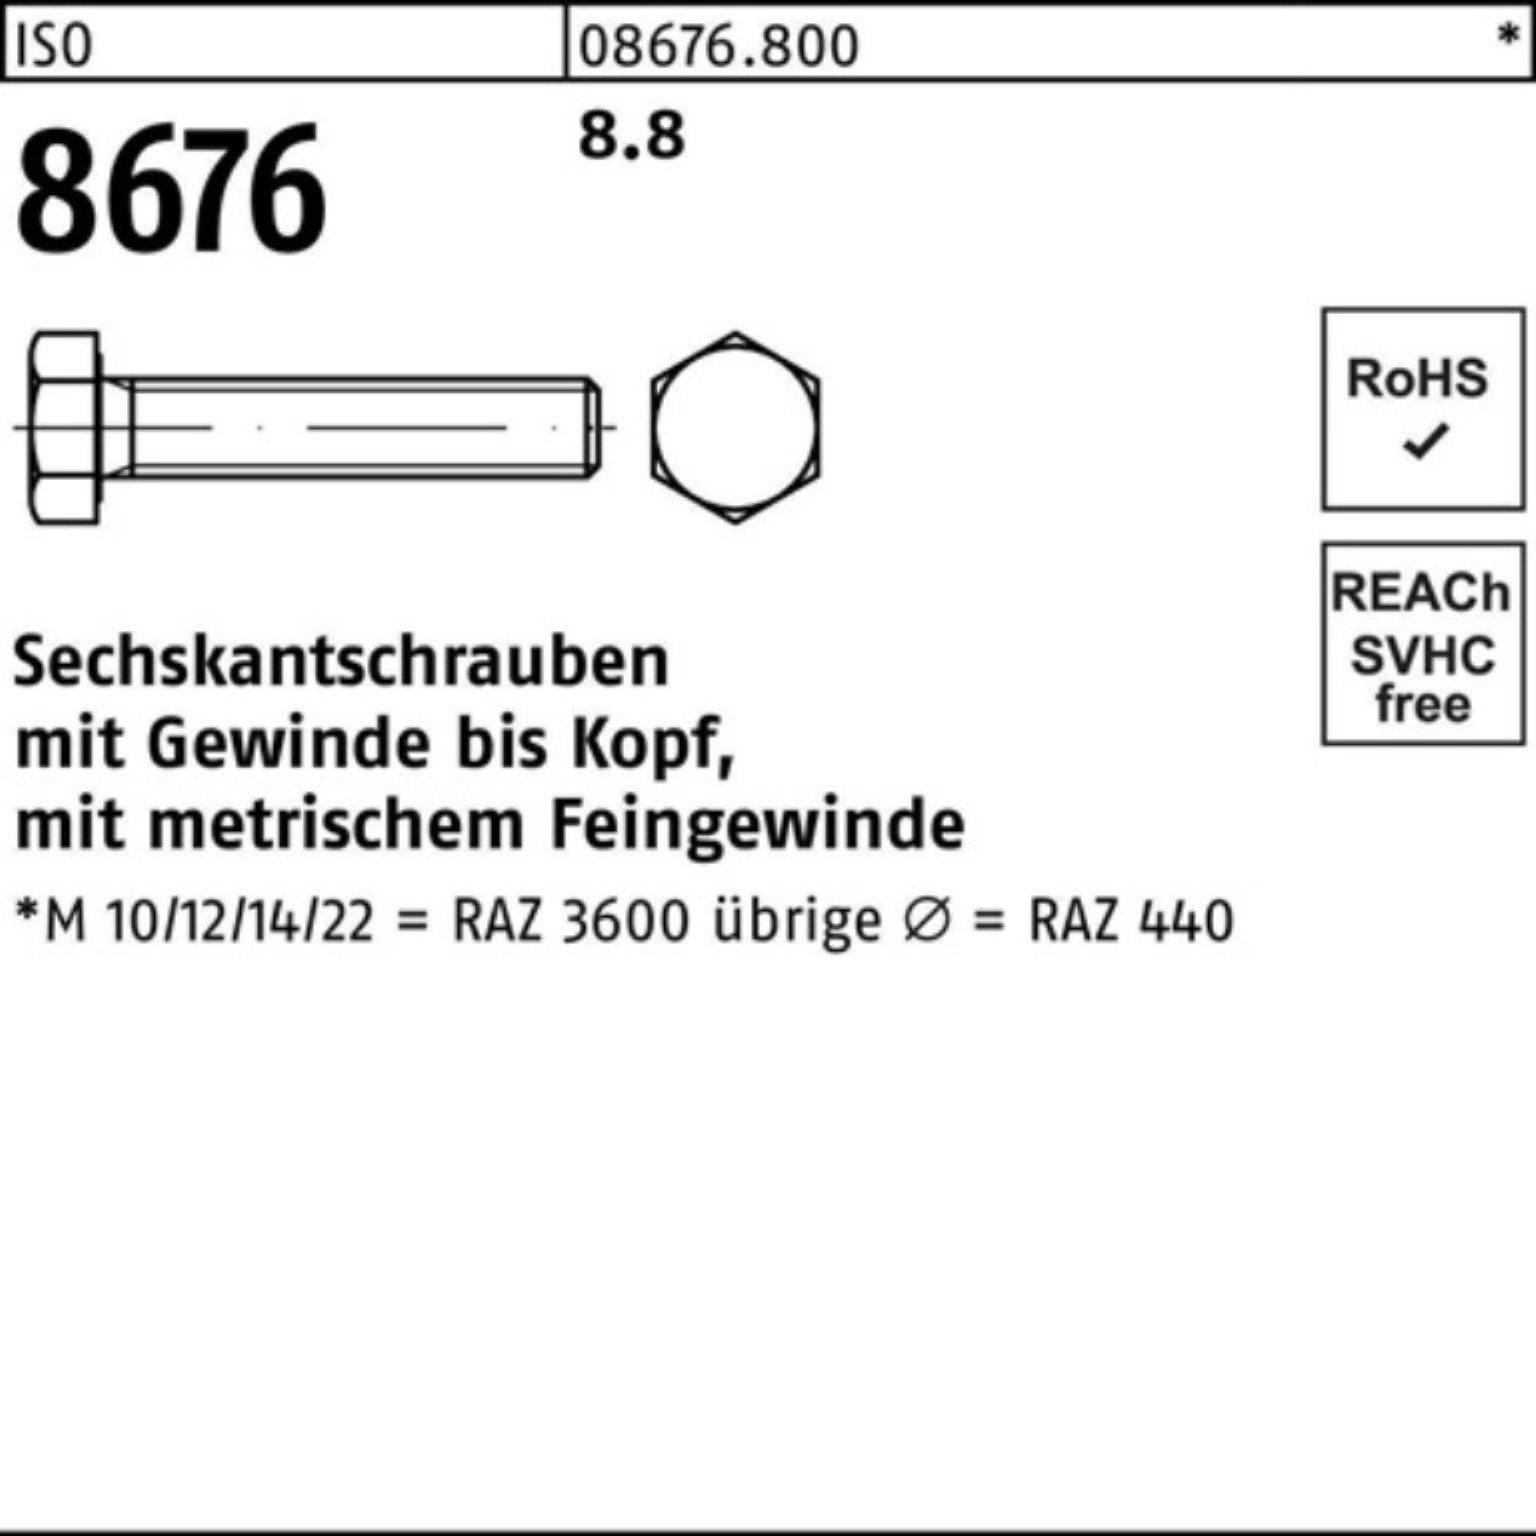 Reyher Sechskantschraube 8.8 100er ISO Stück 25 Pack Sechskantschraube VG ISO M20x1,5x130 8676